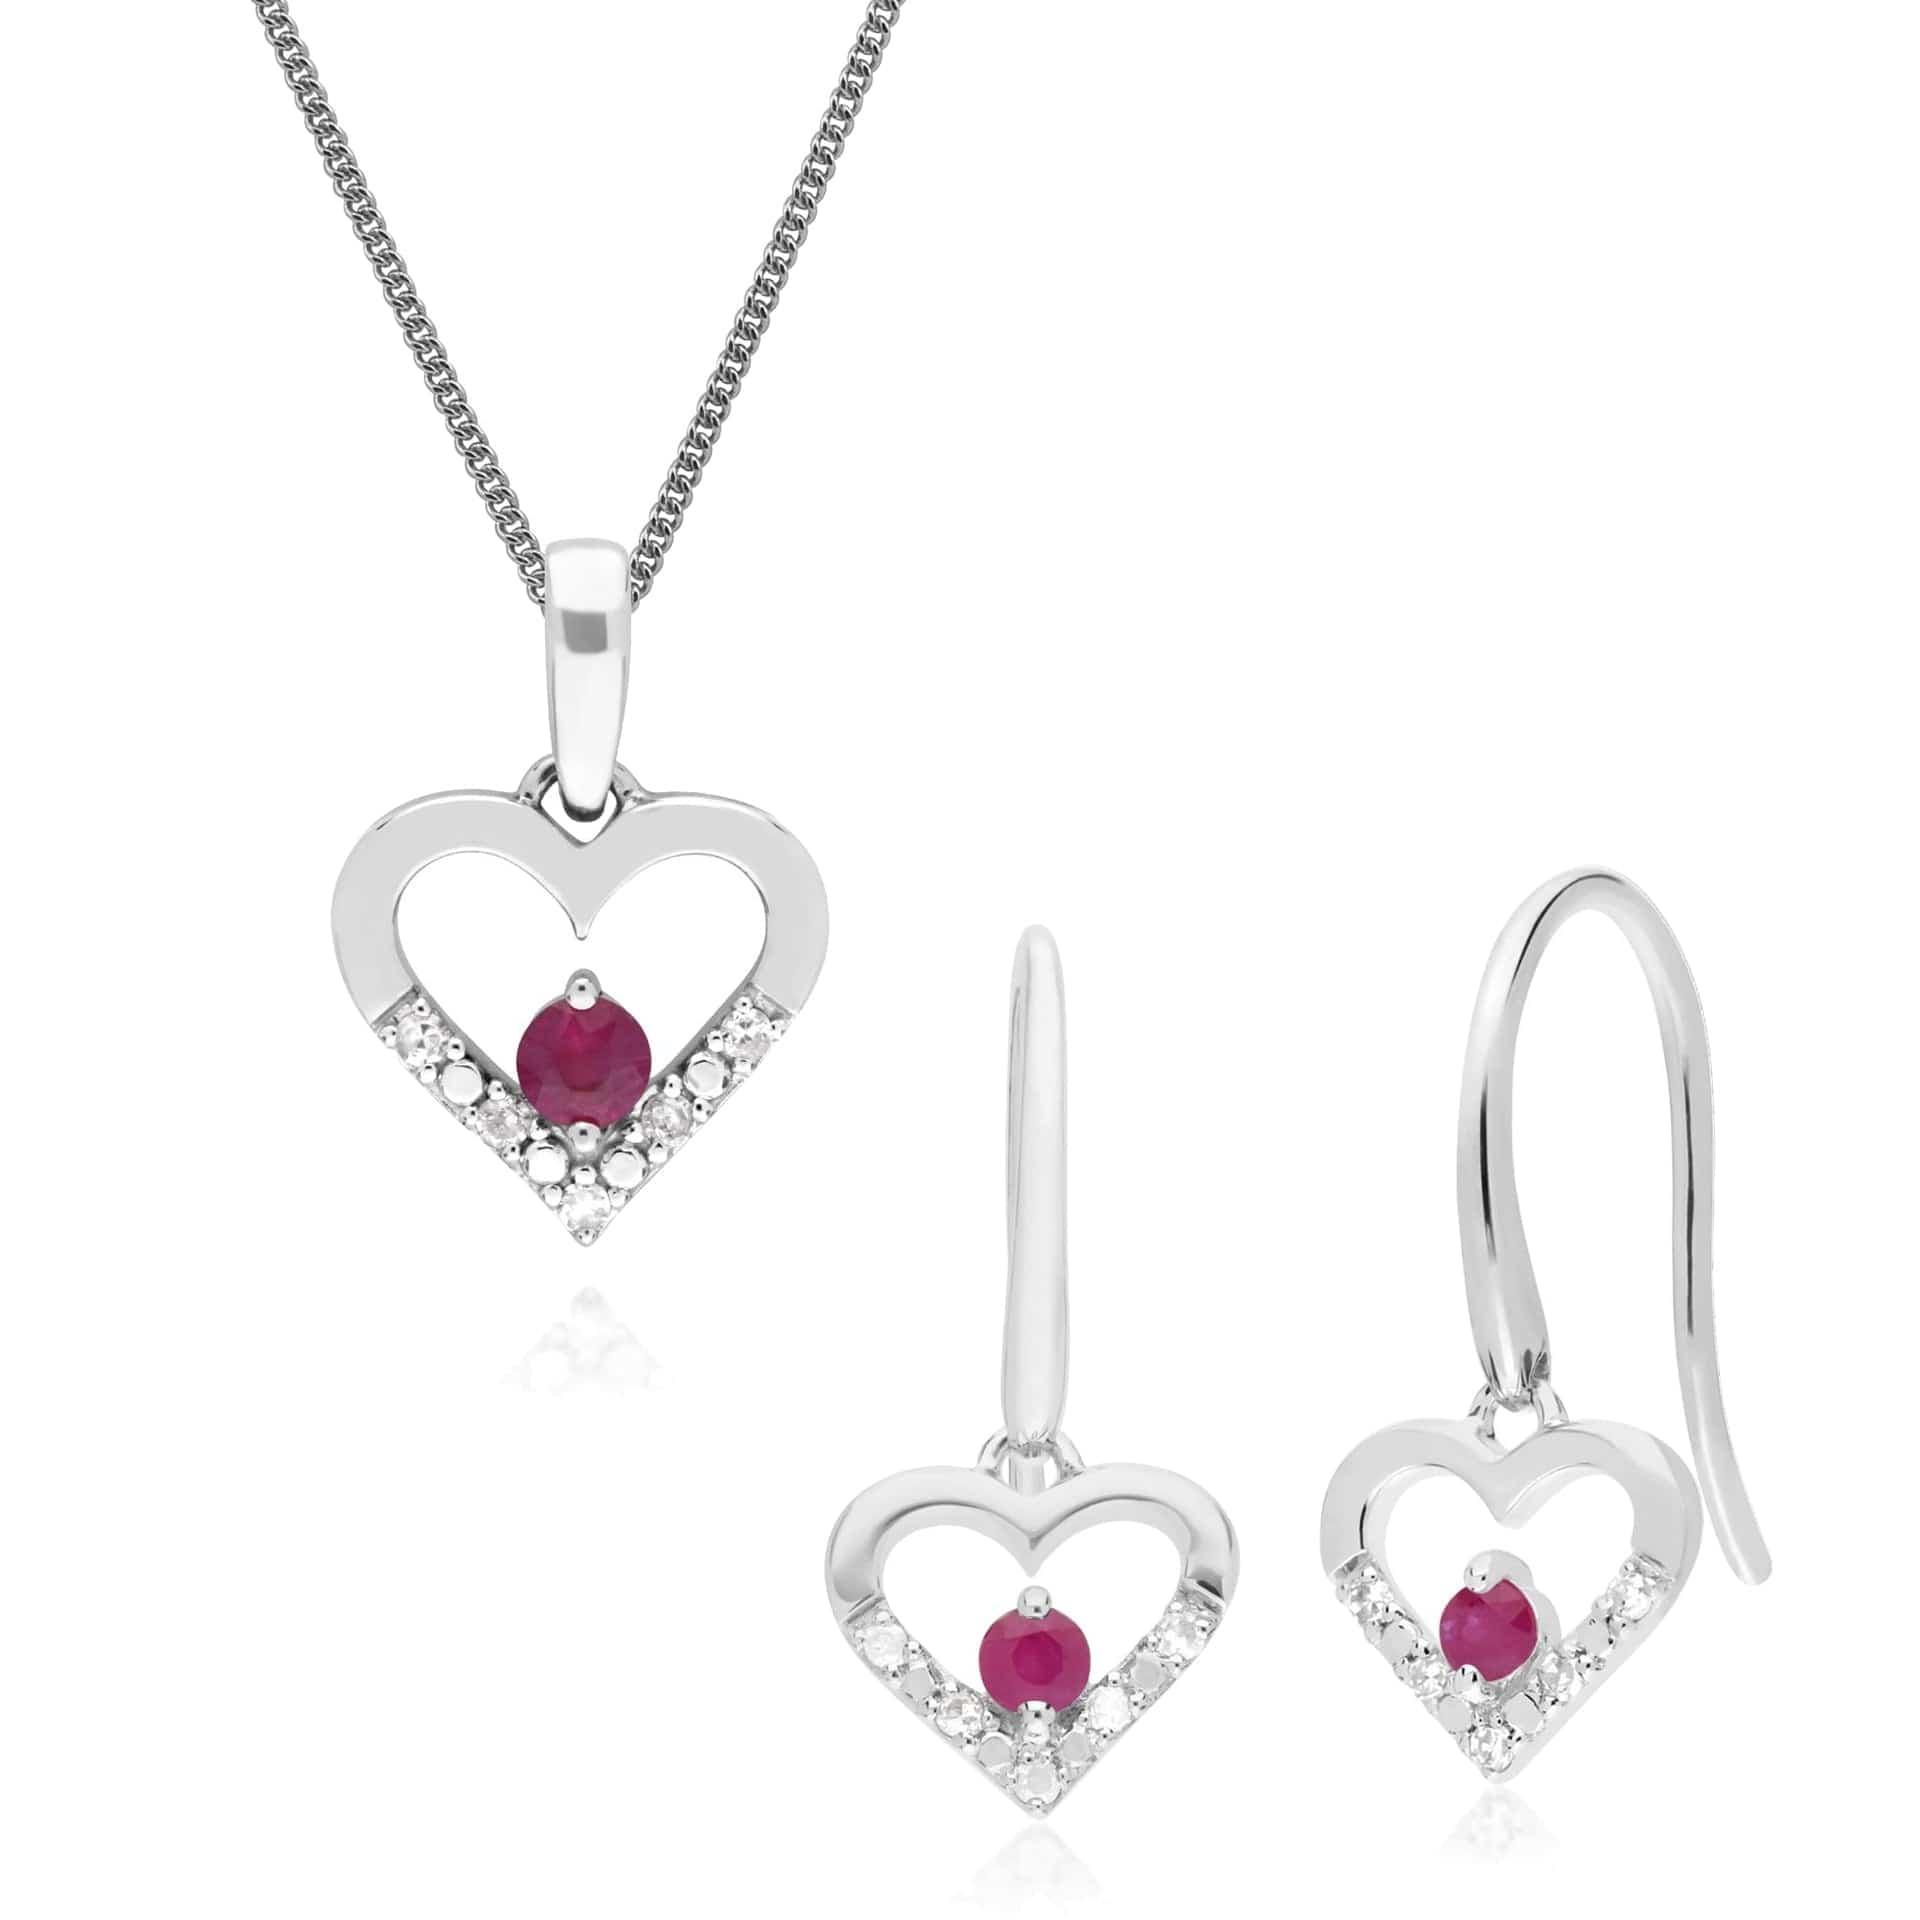 162E0258019-162P0219019 Classic Round Ruby & Diamond Heart Drop Earrings & Pendant Set in 9ct White Gold 1